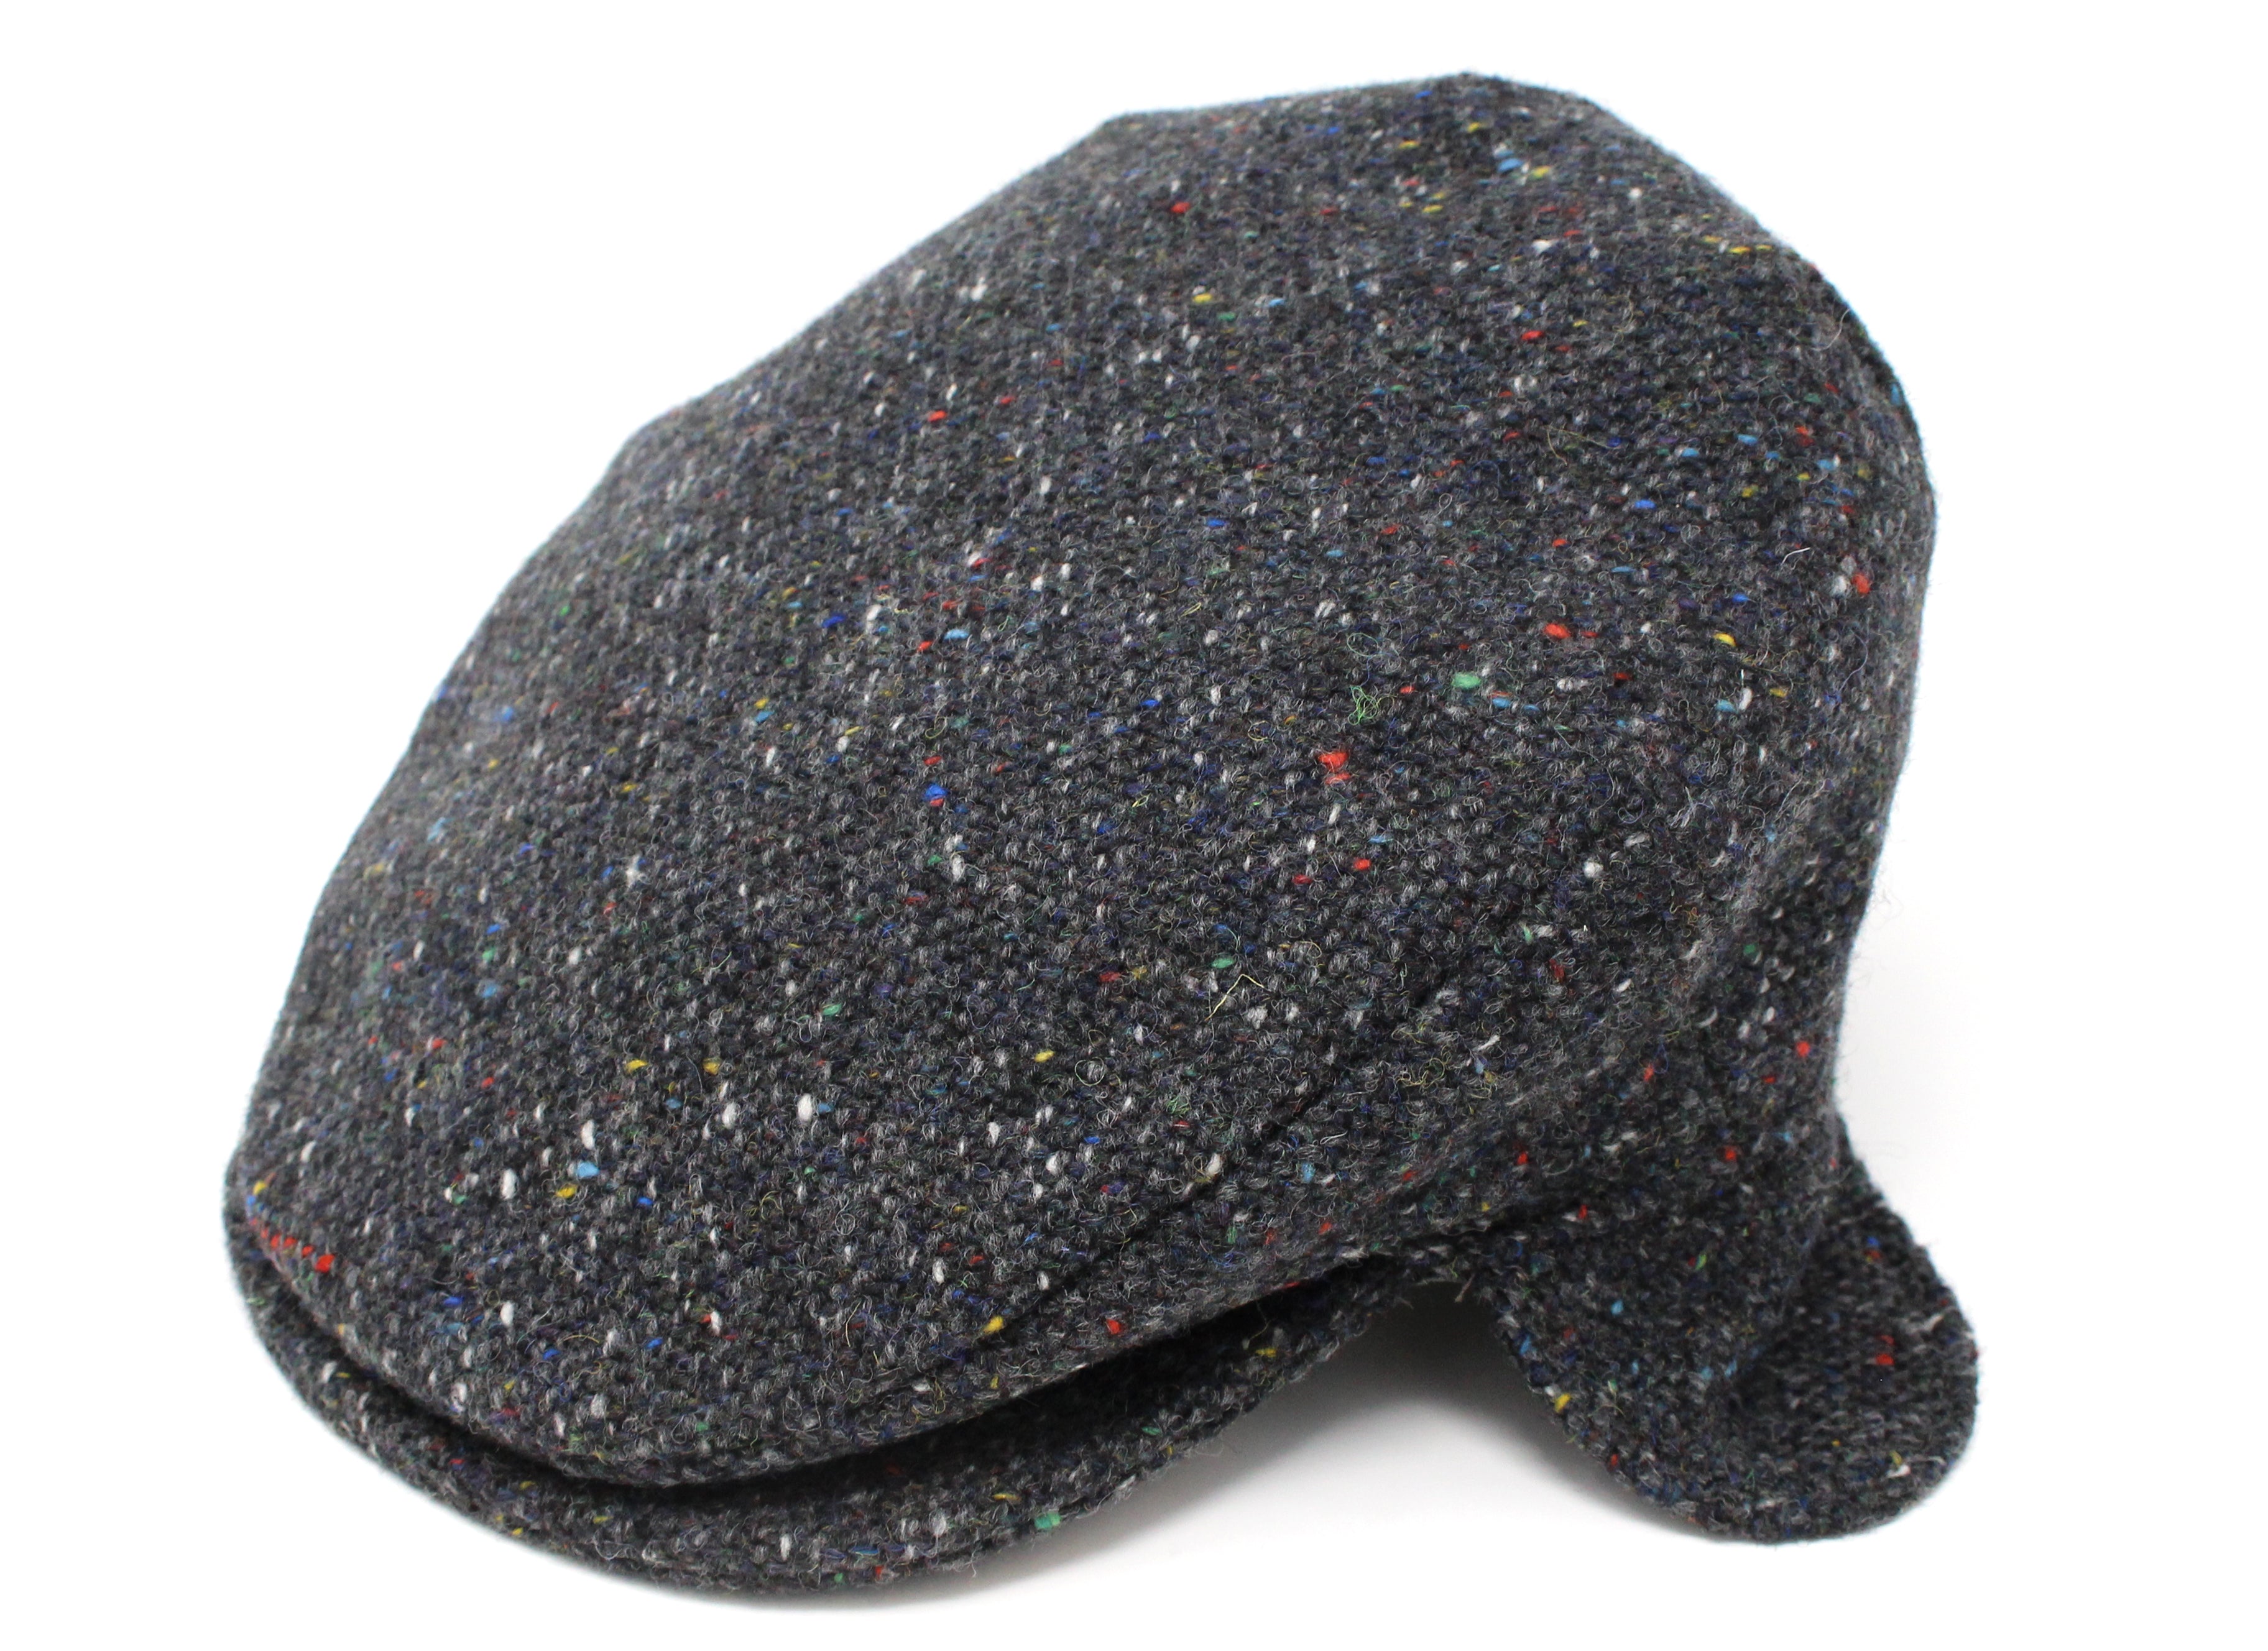 Hanna Hats Vintage Flat Cap with ear flaps Irish Tweed Dark Grey Charcoal Fleck Salt & Pepper